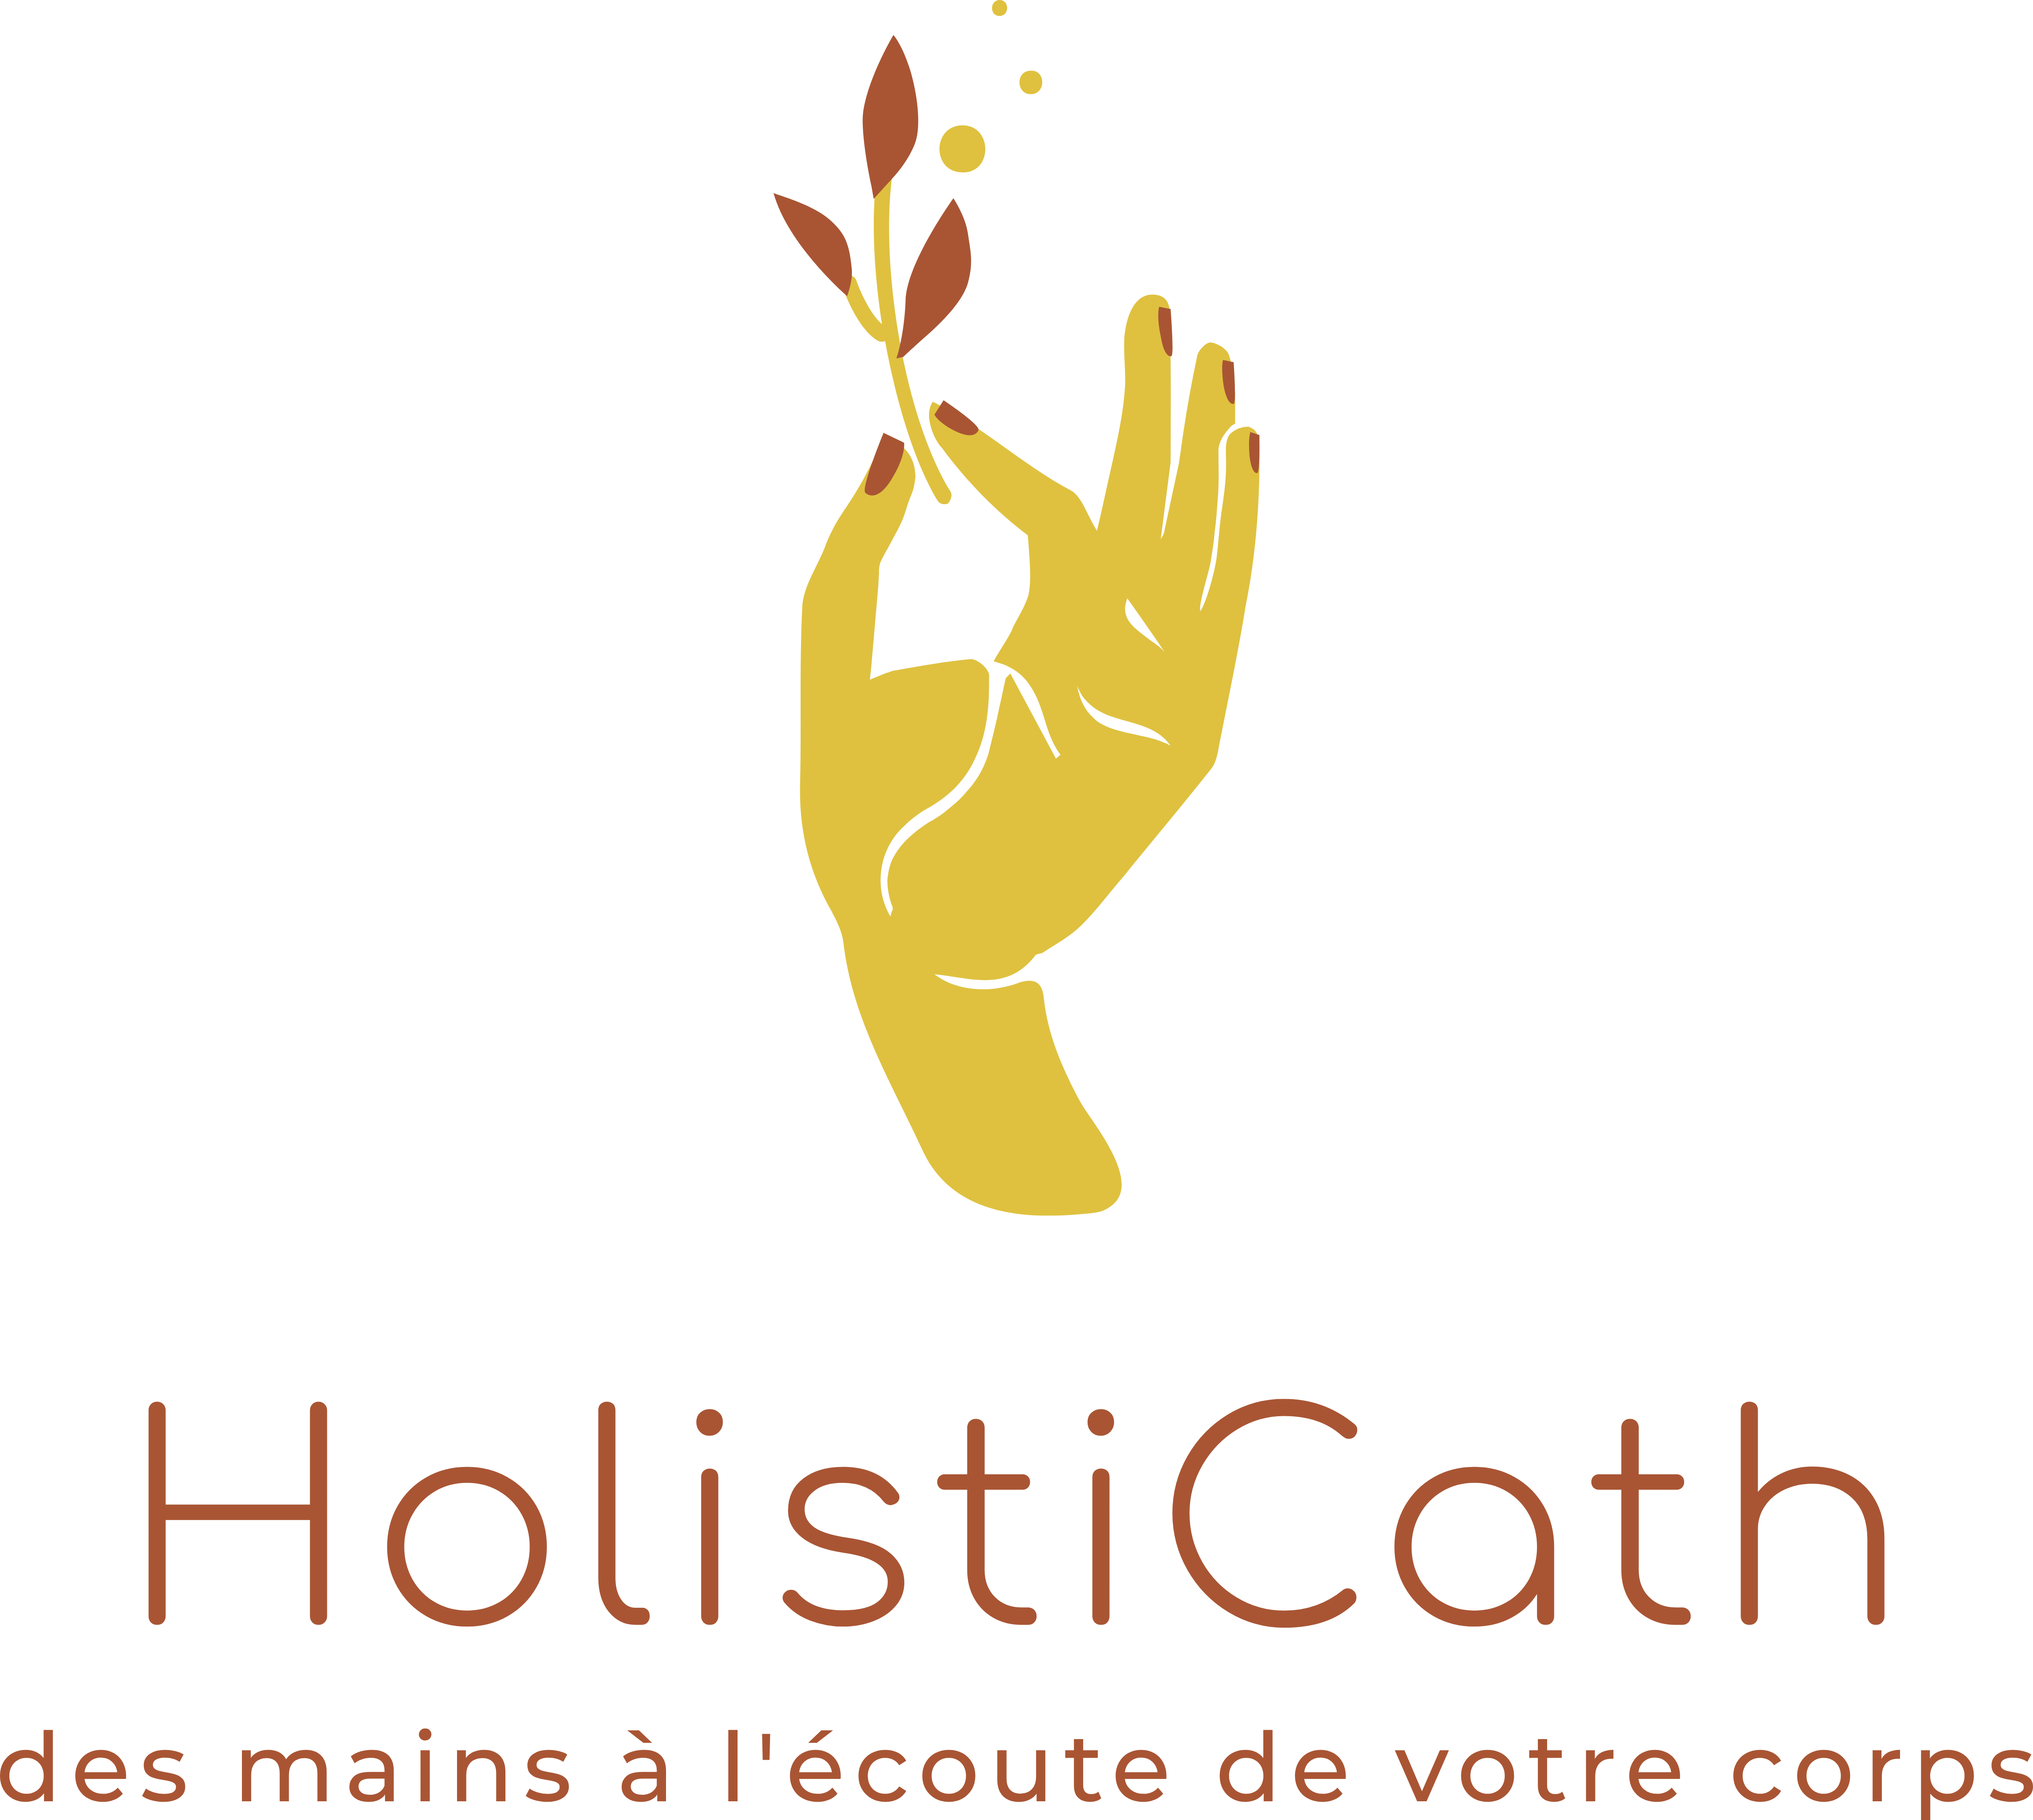 Holisticath - Catherine Schaller